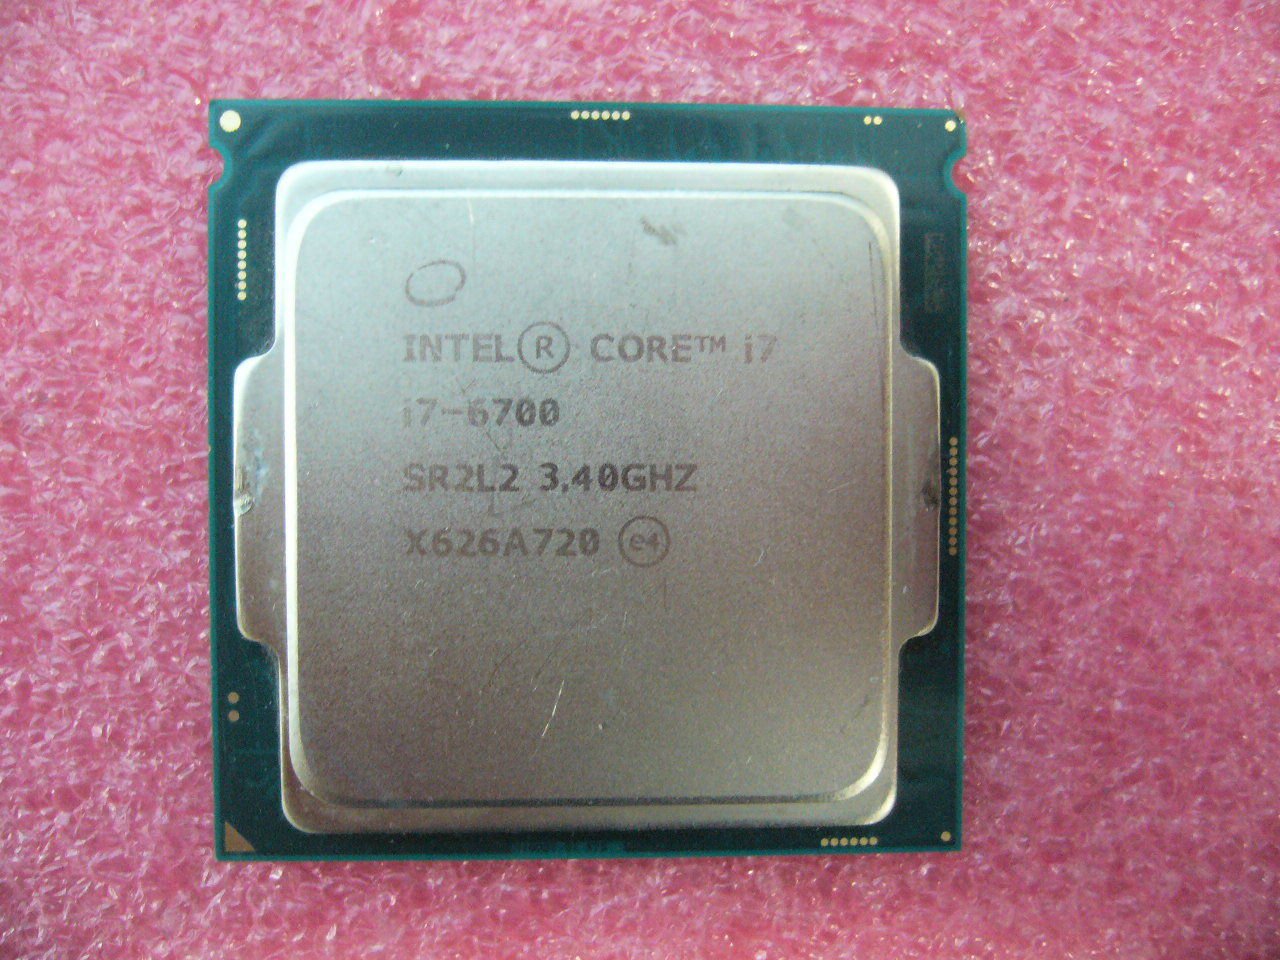 QTY 1x Intel CPU i7-6700 Quad-Cores 3.40Ghz 8MB LGA1151 SR2L2 SR2BT NOT